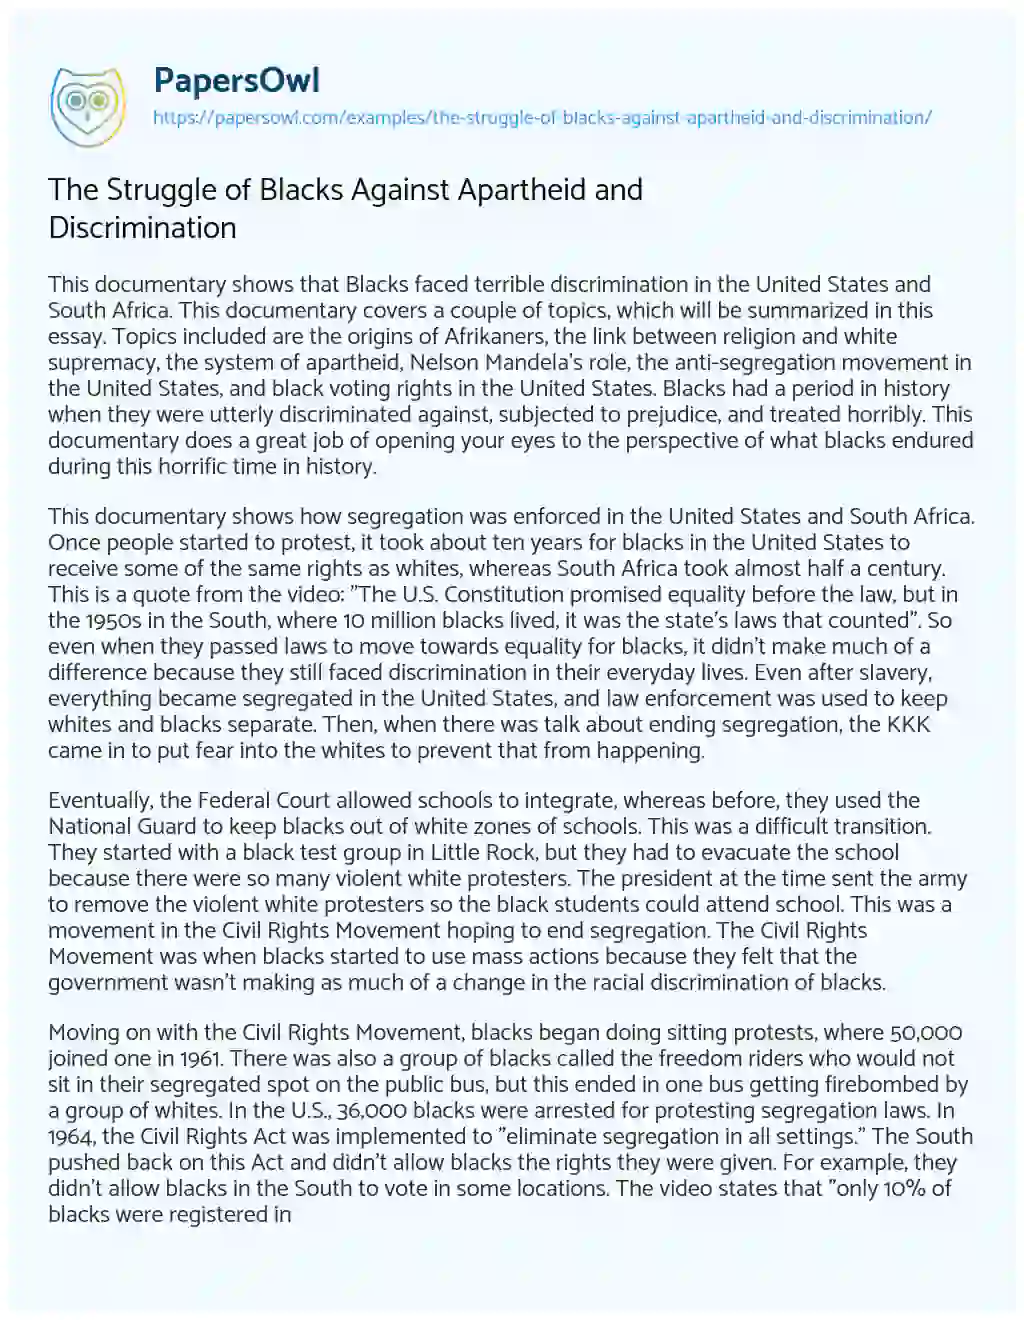 Essay on The Struggle of Blacks against Apartheid and Discrimination